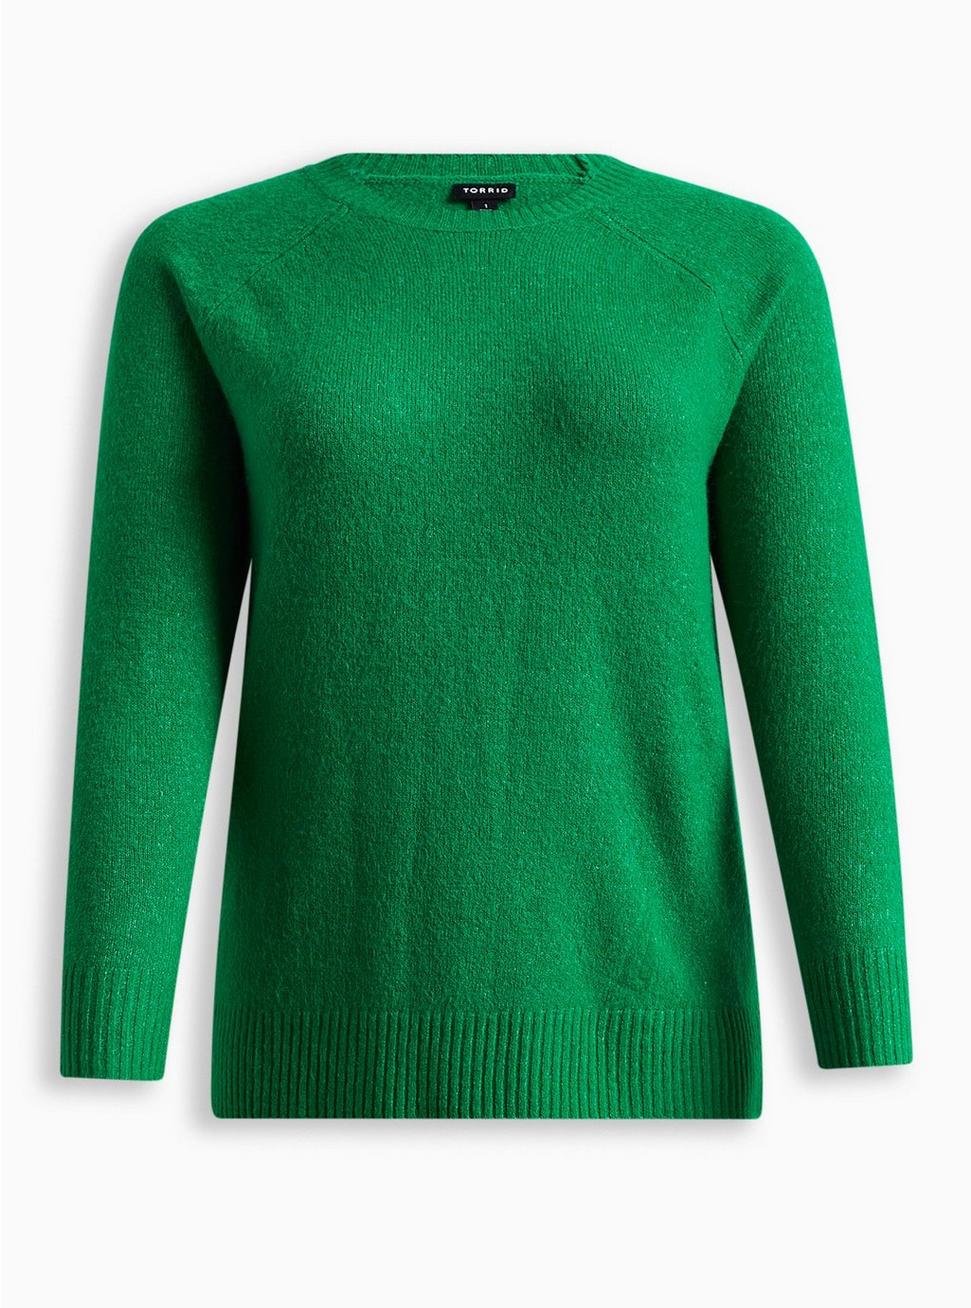 Vegan Cashmere Pullover Sweater, BRIGHT GREEN, hi-res